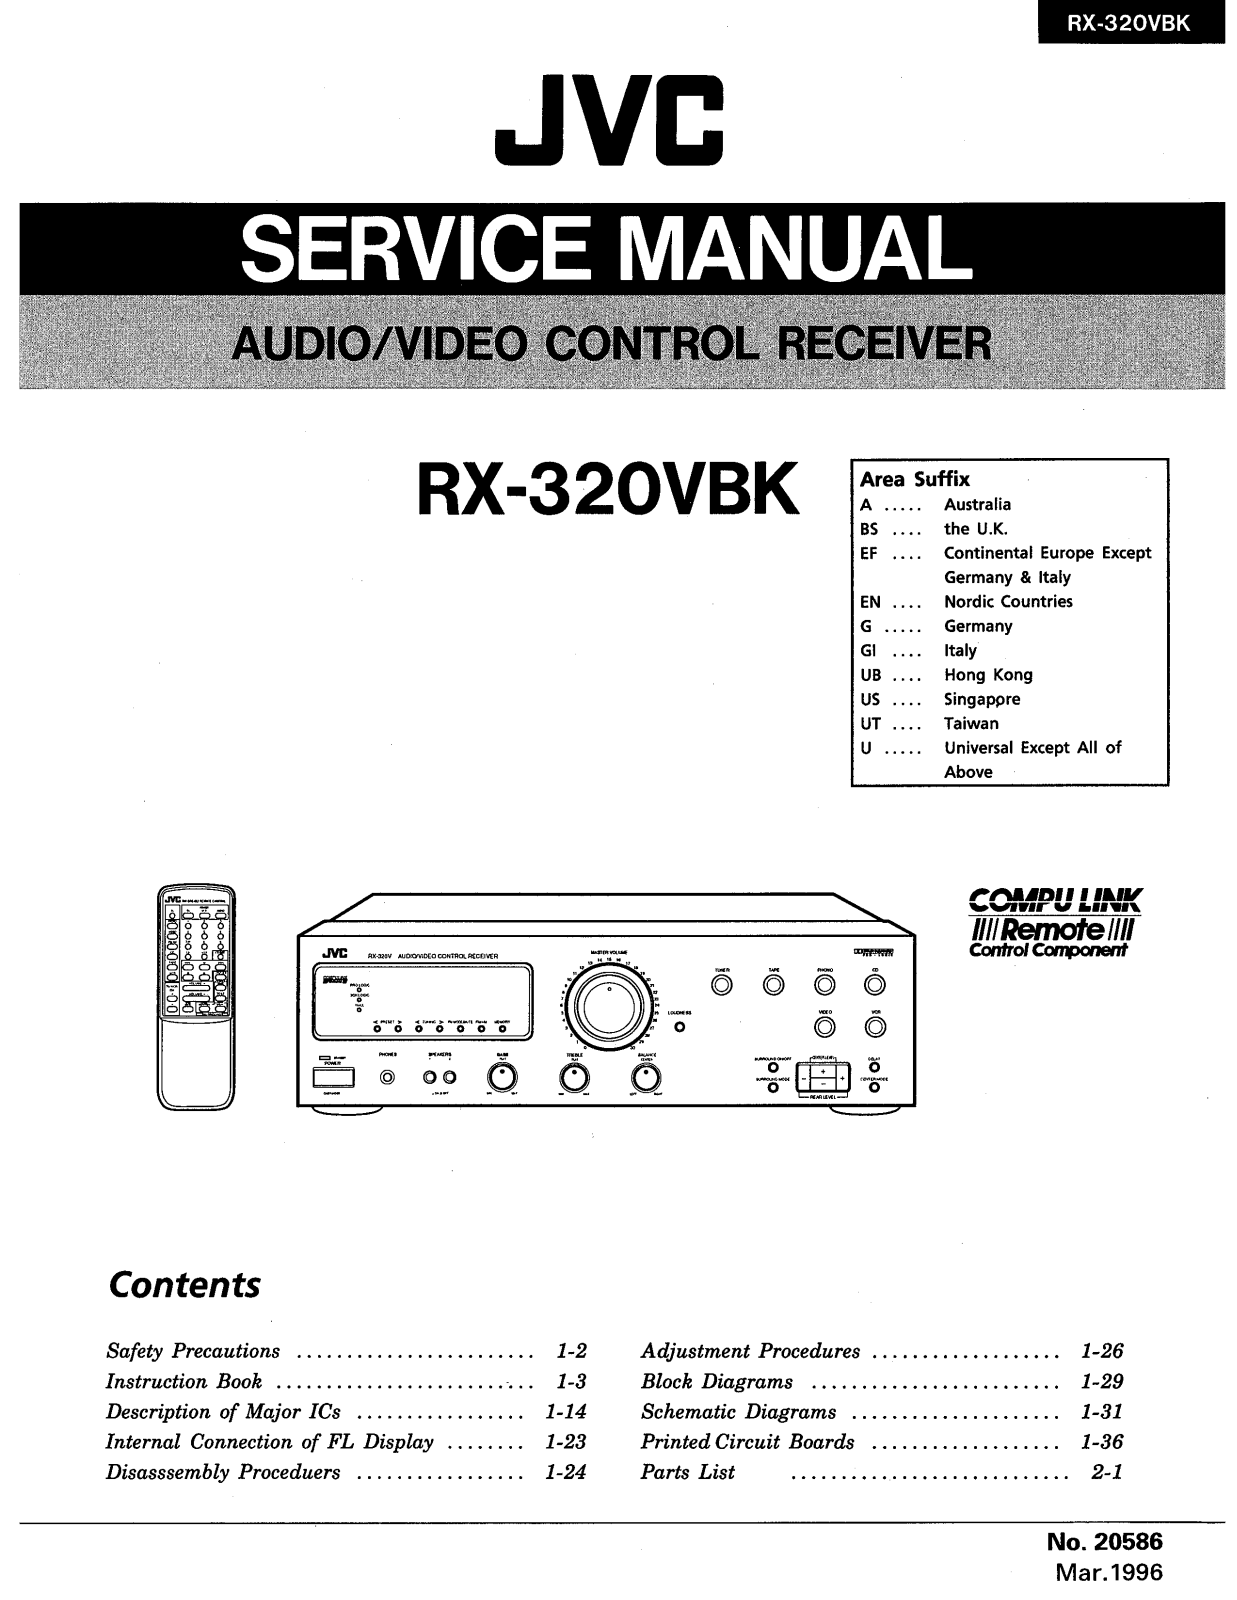 JVC RX-320VBK Service Manual